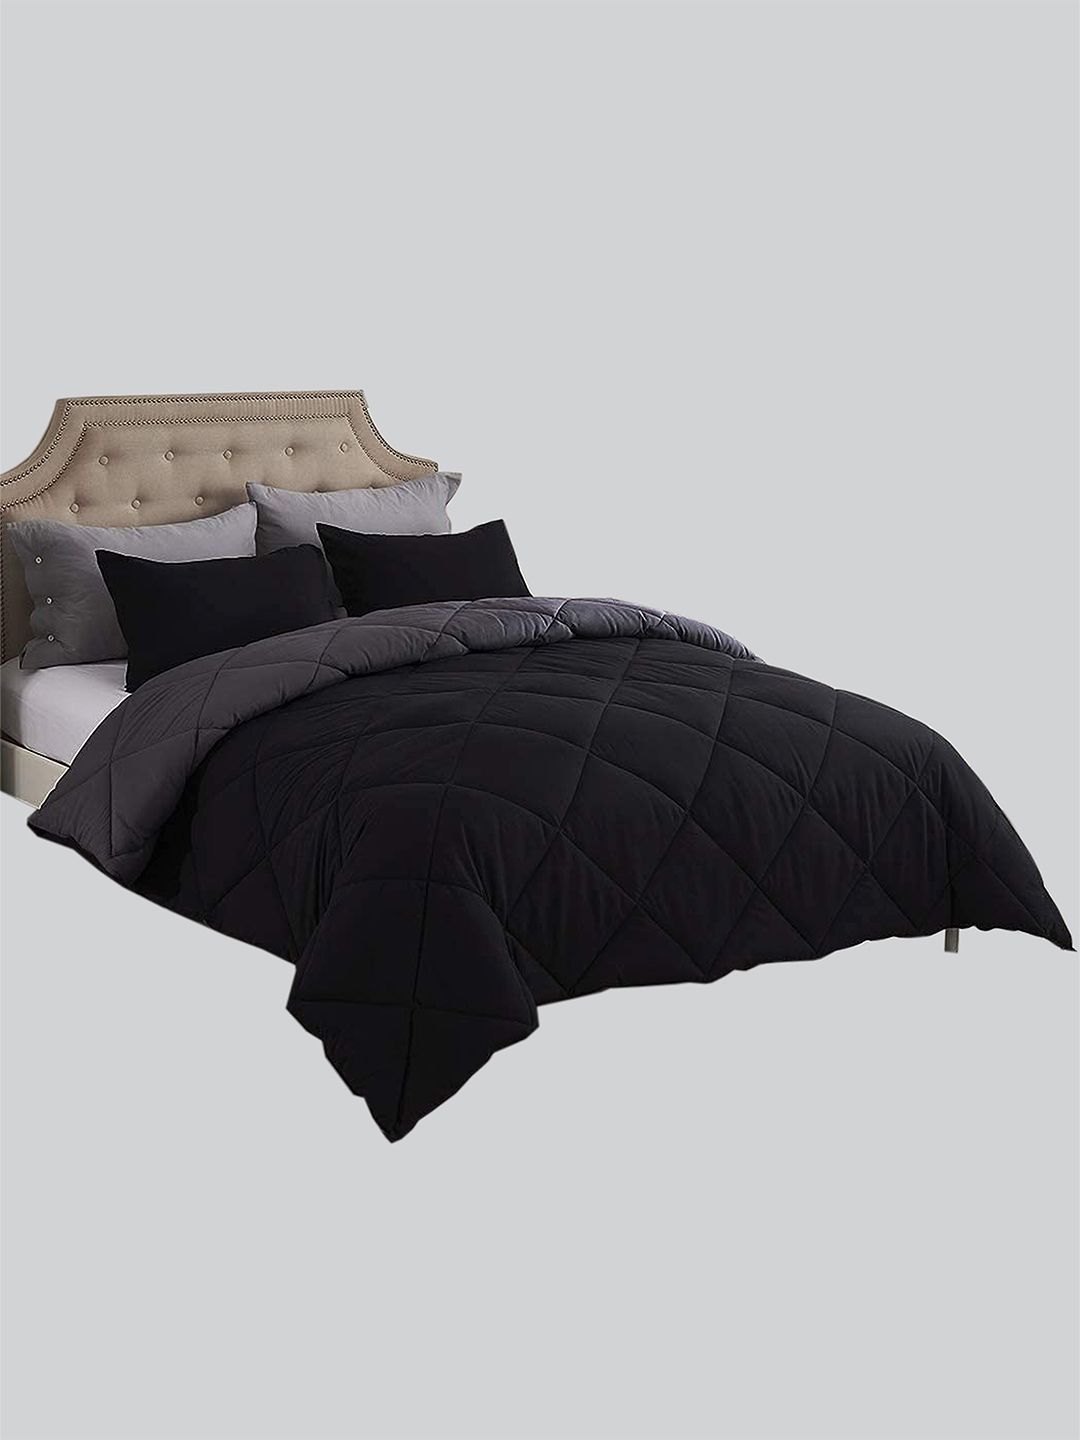 RAASO Black & Grey 200 GSM Microfiber AC Room Double Bed Blanket Price in India